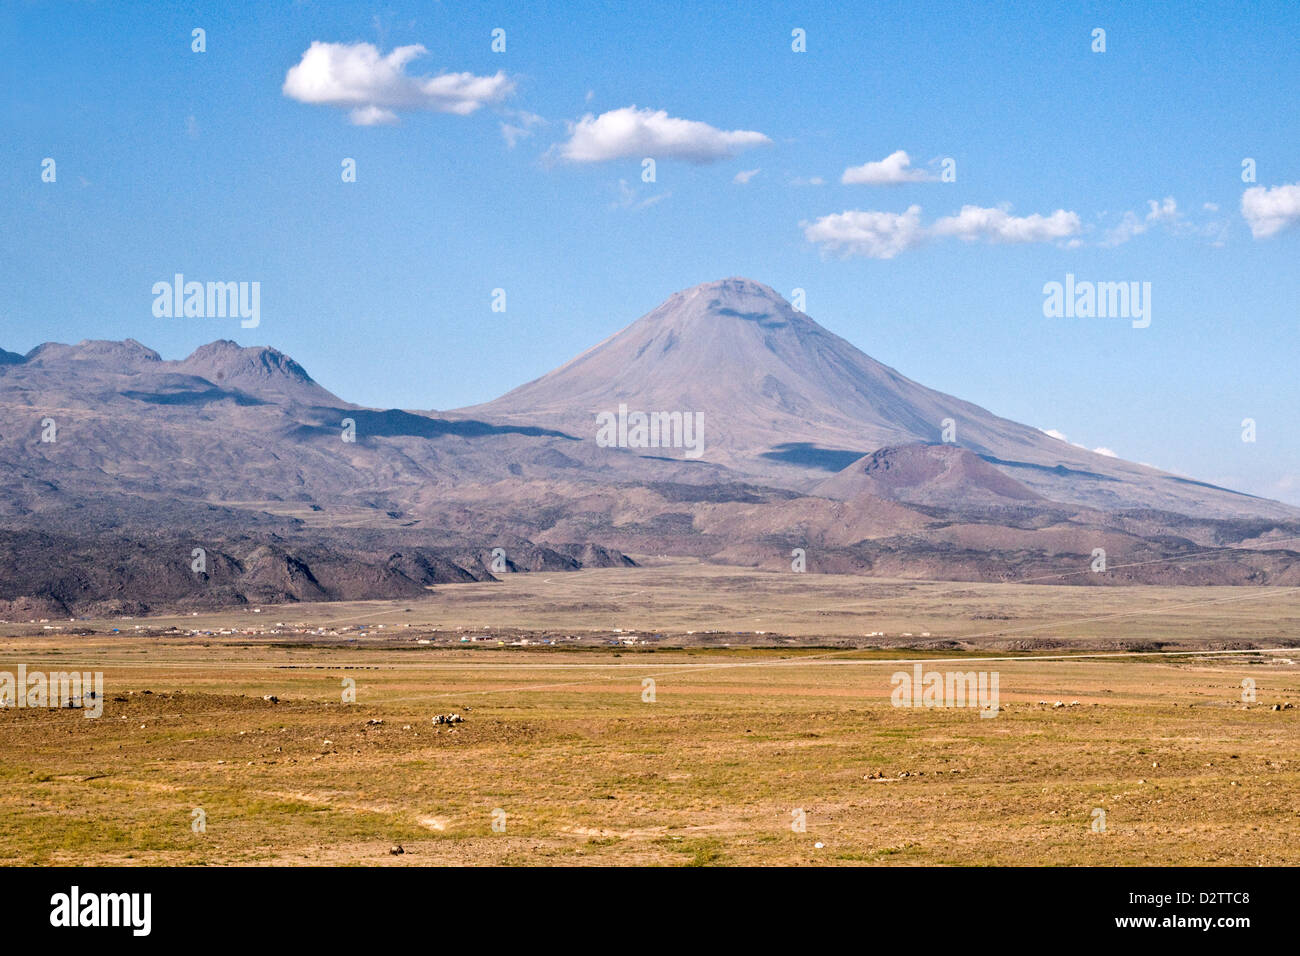 Little Ararat or Lesser Ararat, the smaller volcanic cone attached to the Mount Ararat massif, in eastern Anatolia, Turkey. Stock Photo